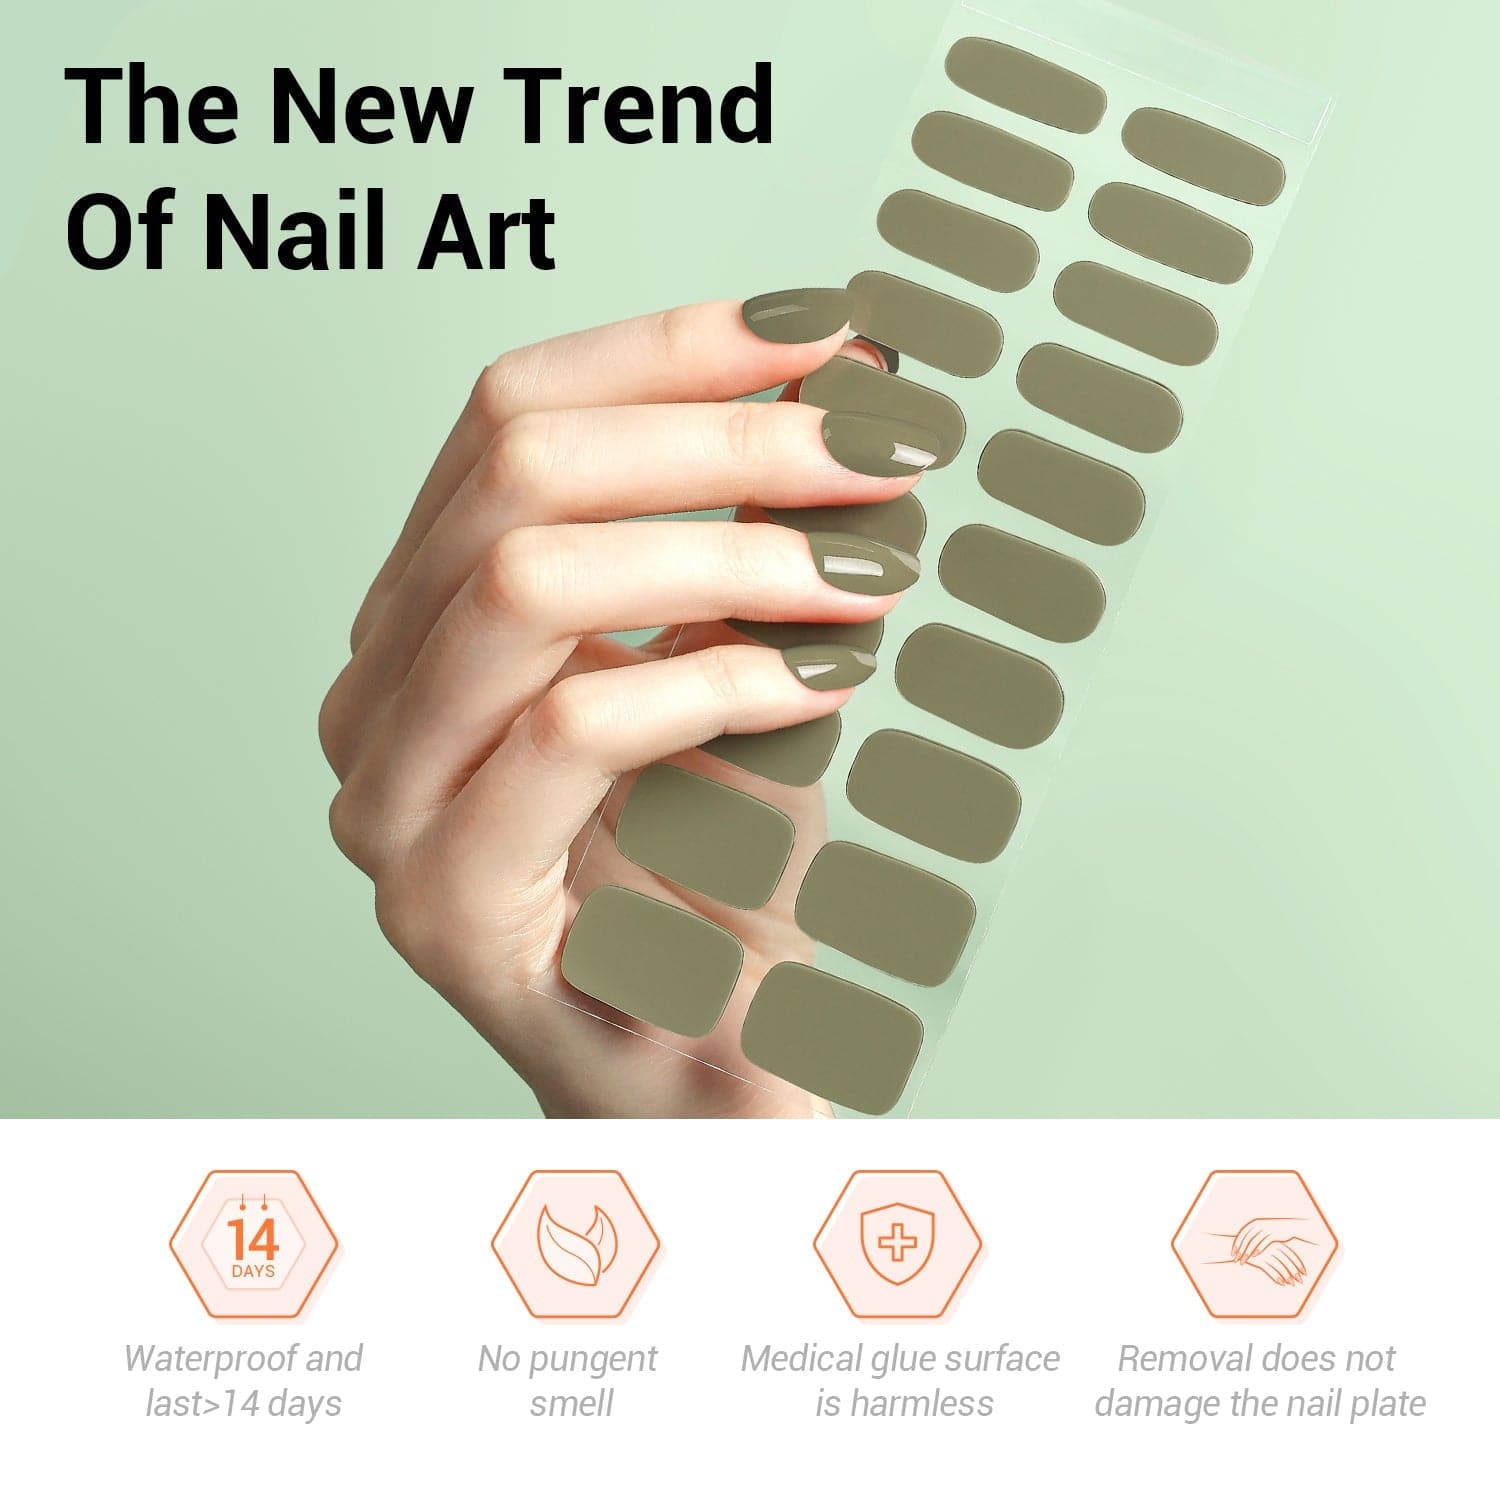 Green - Semi-Cured Gel Nail Strips - MODELONES.com